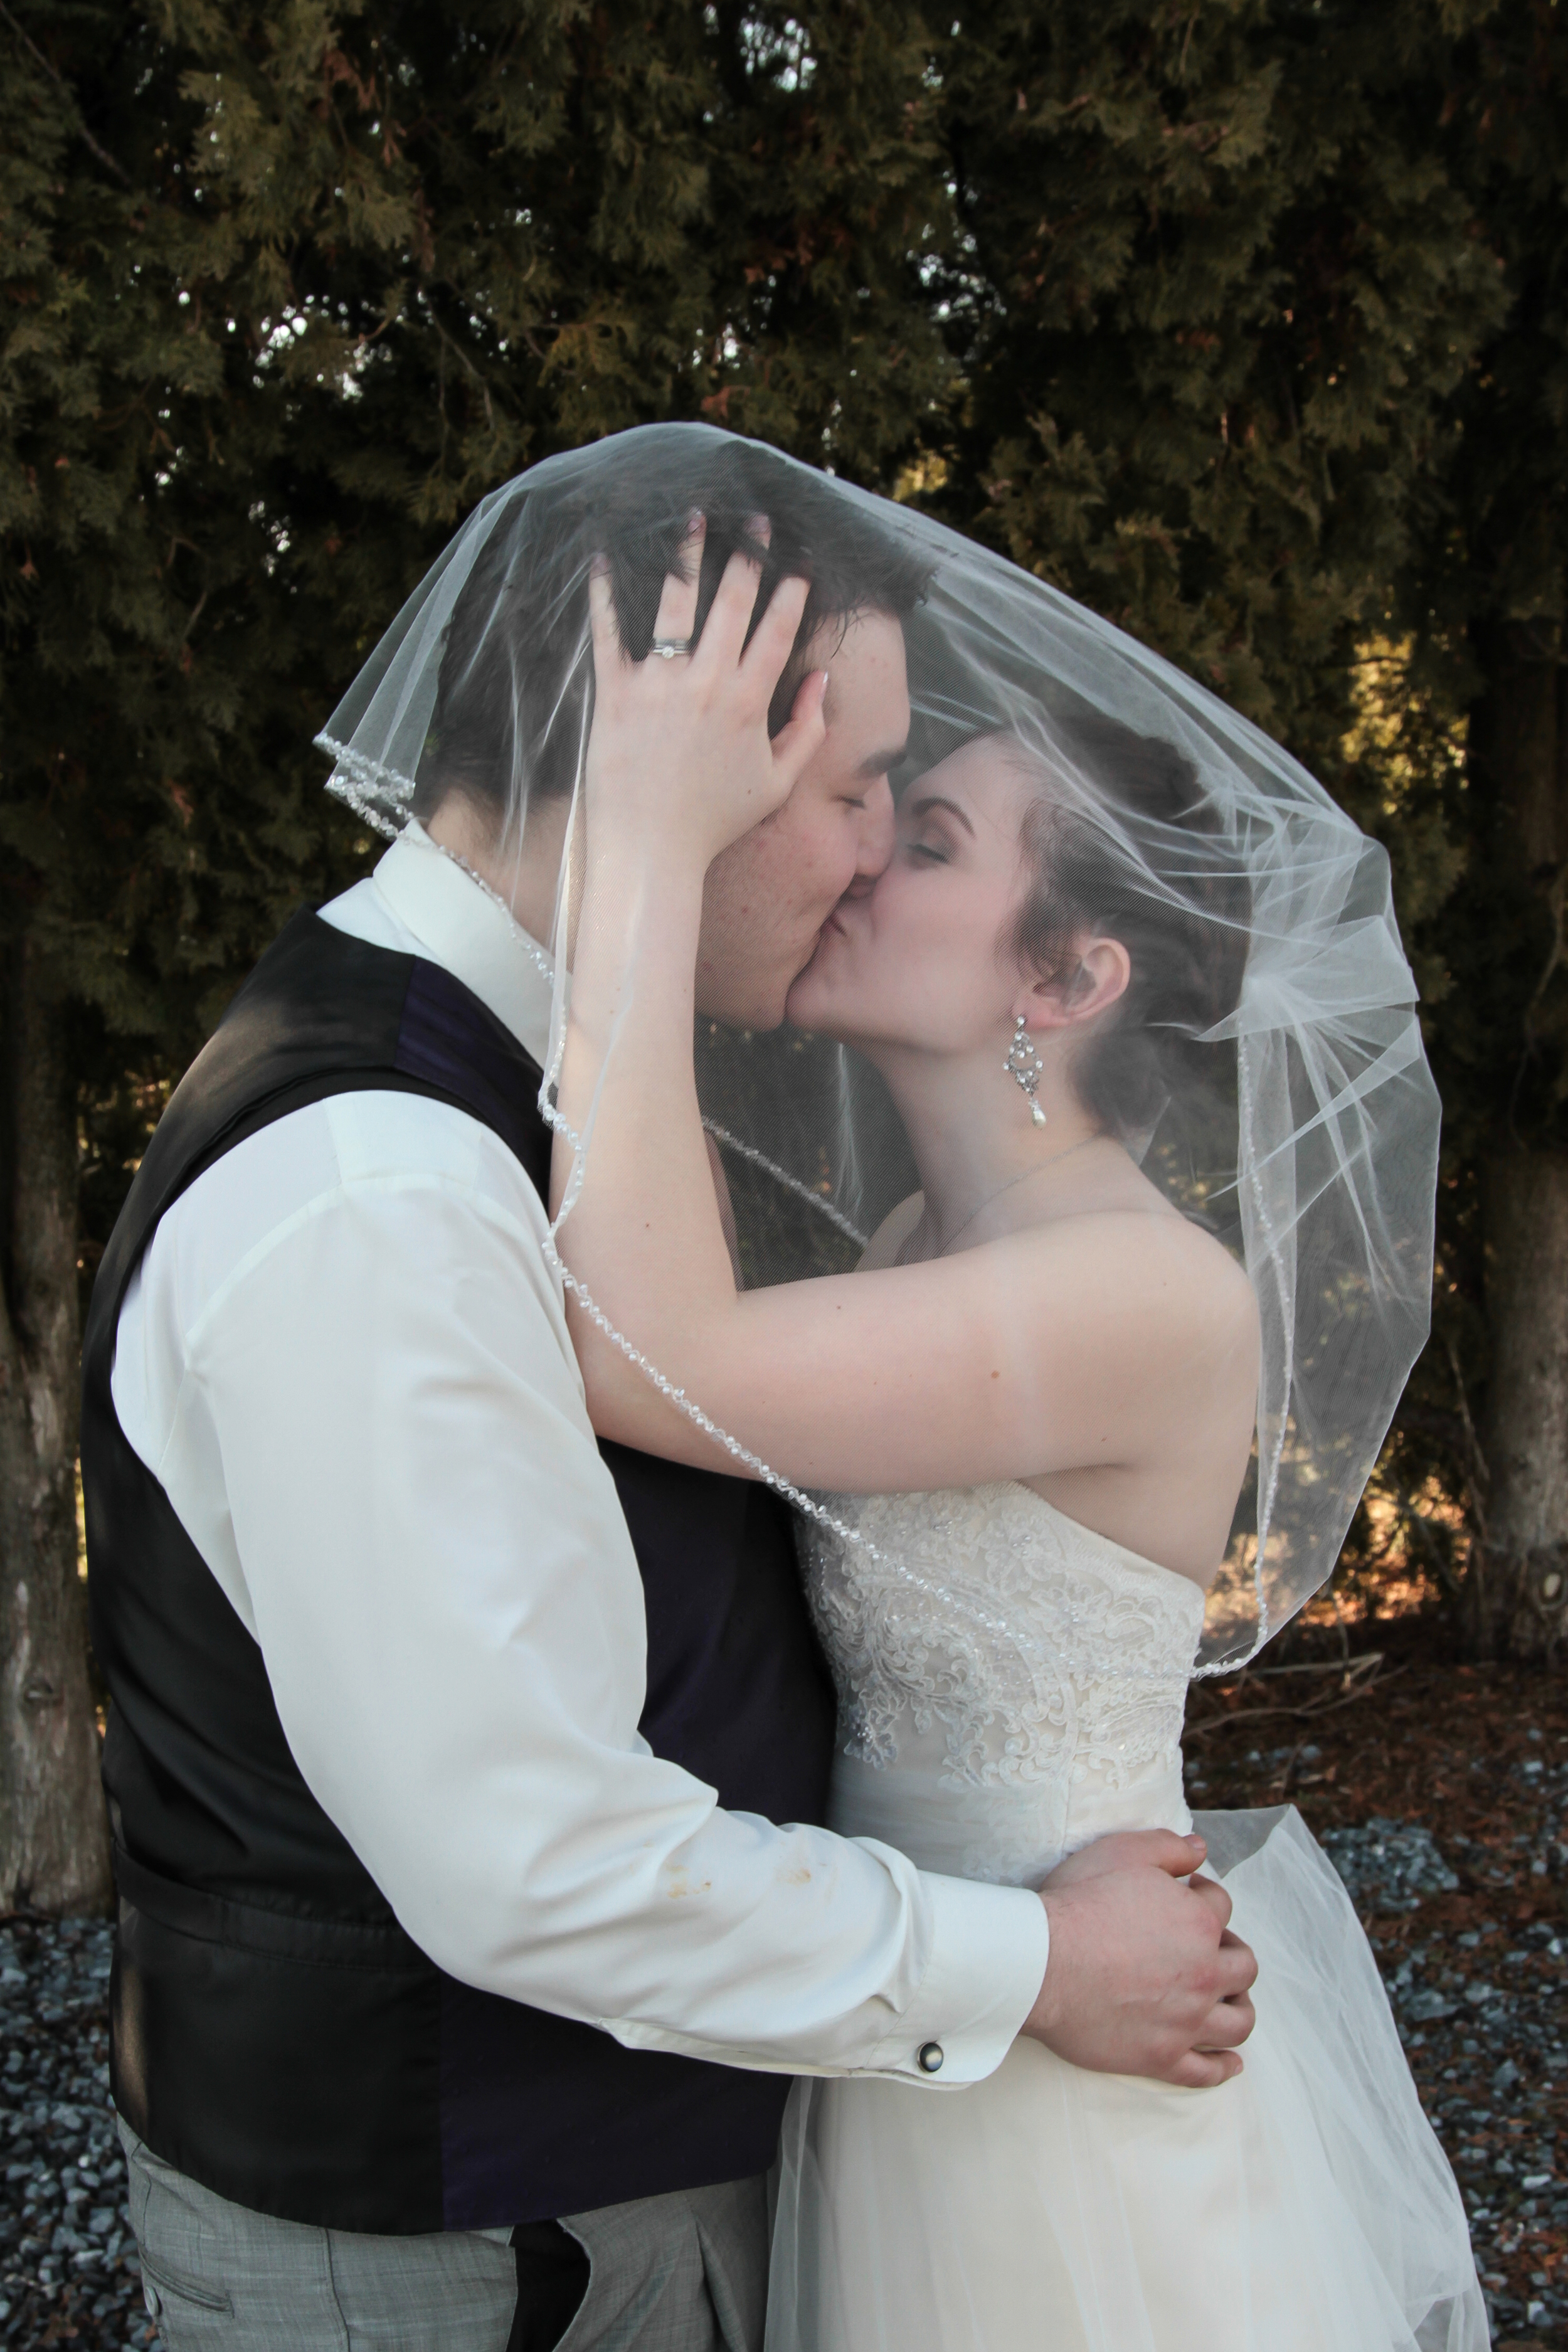  Wedding Wednesday Blog Post on Why We Love Veils. &nbsp;LGBT Friendly Philadelphia Photographer Swiger Photography 